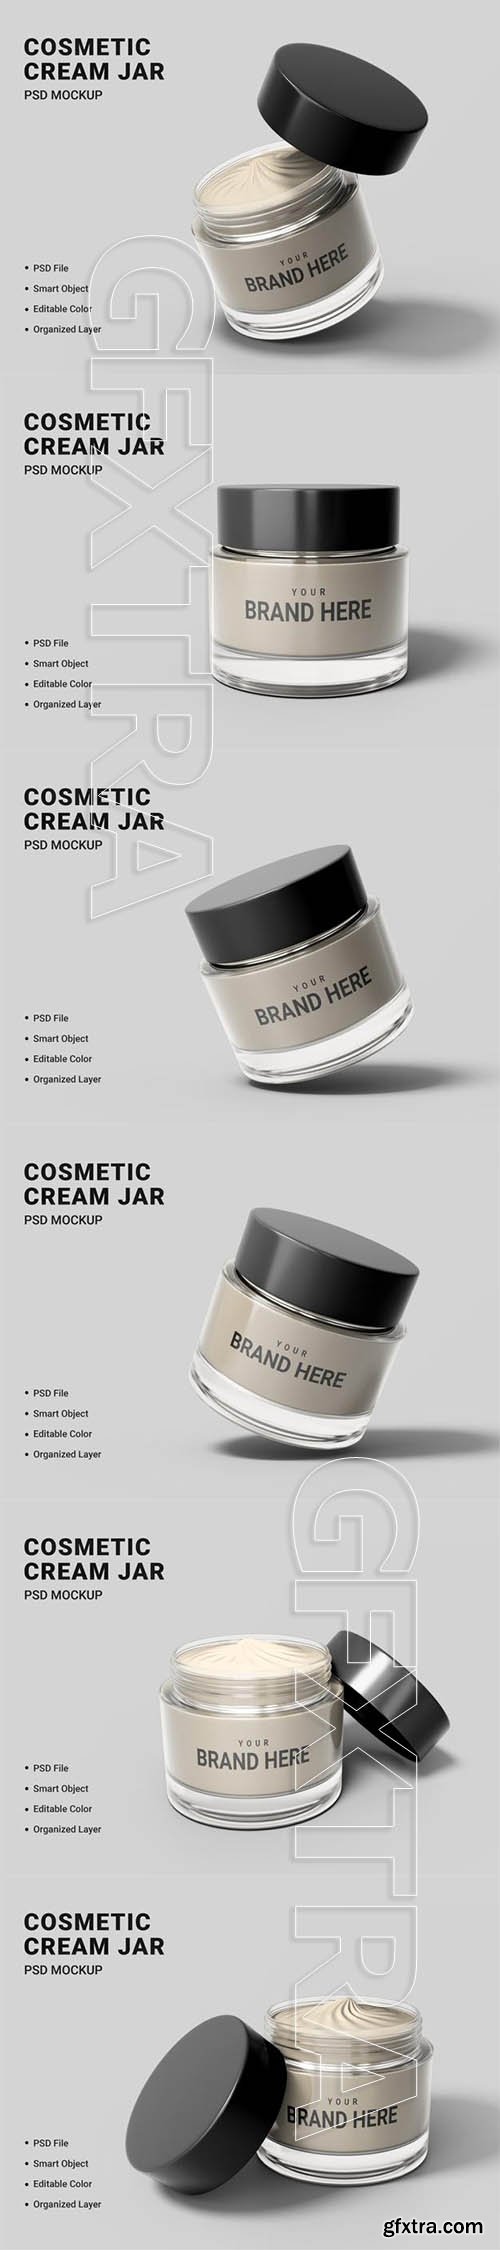 Cosmetic cream jar mockup